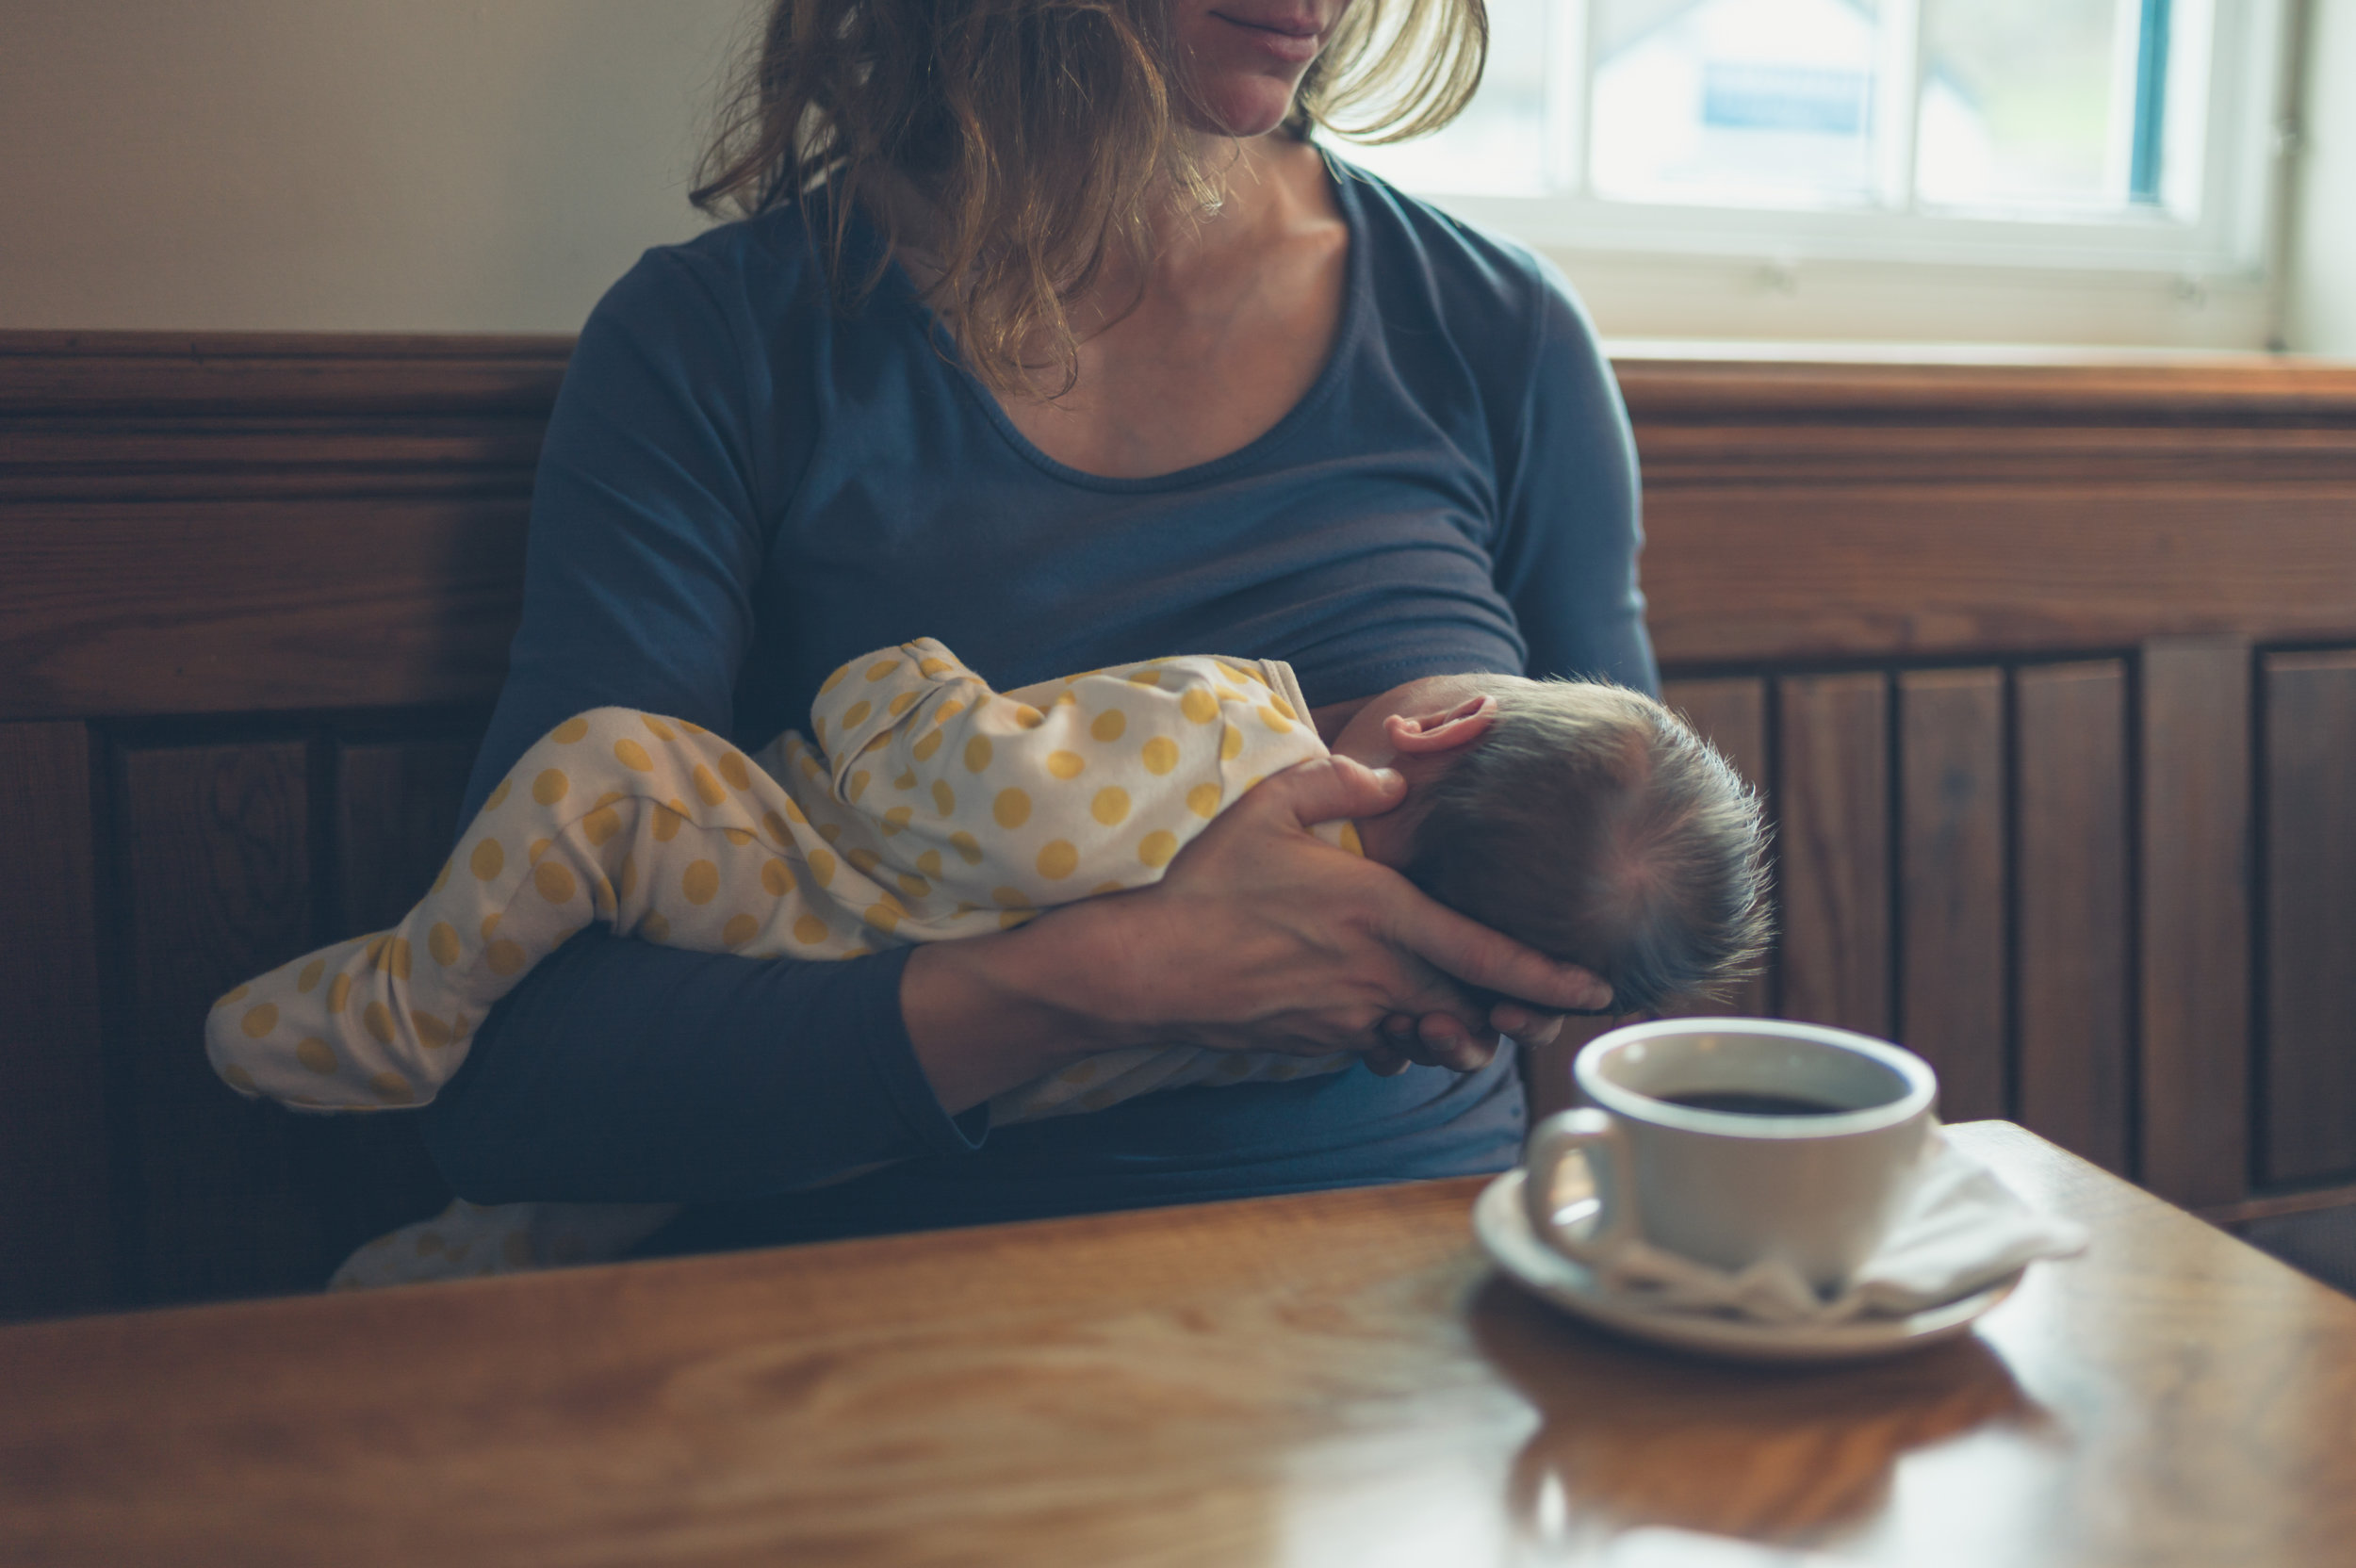 andres montalvo add photo breastfeeding in public tumblr